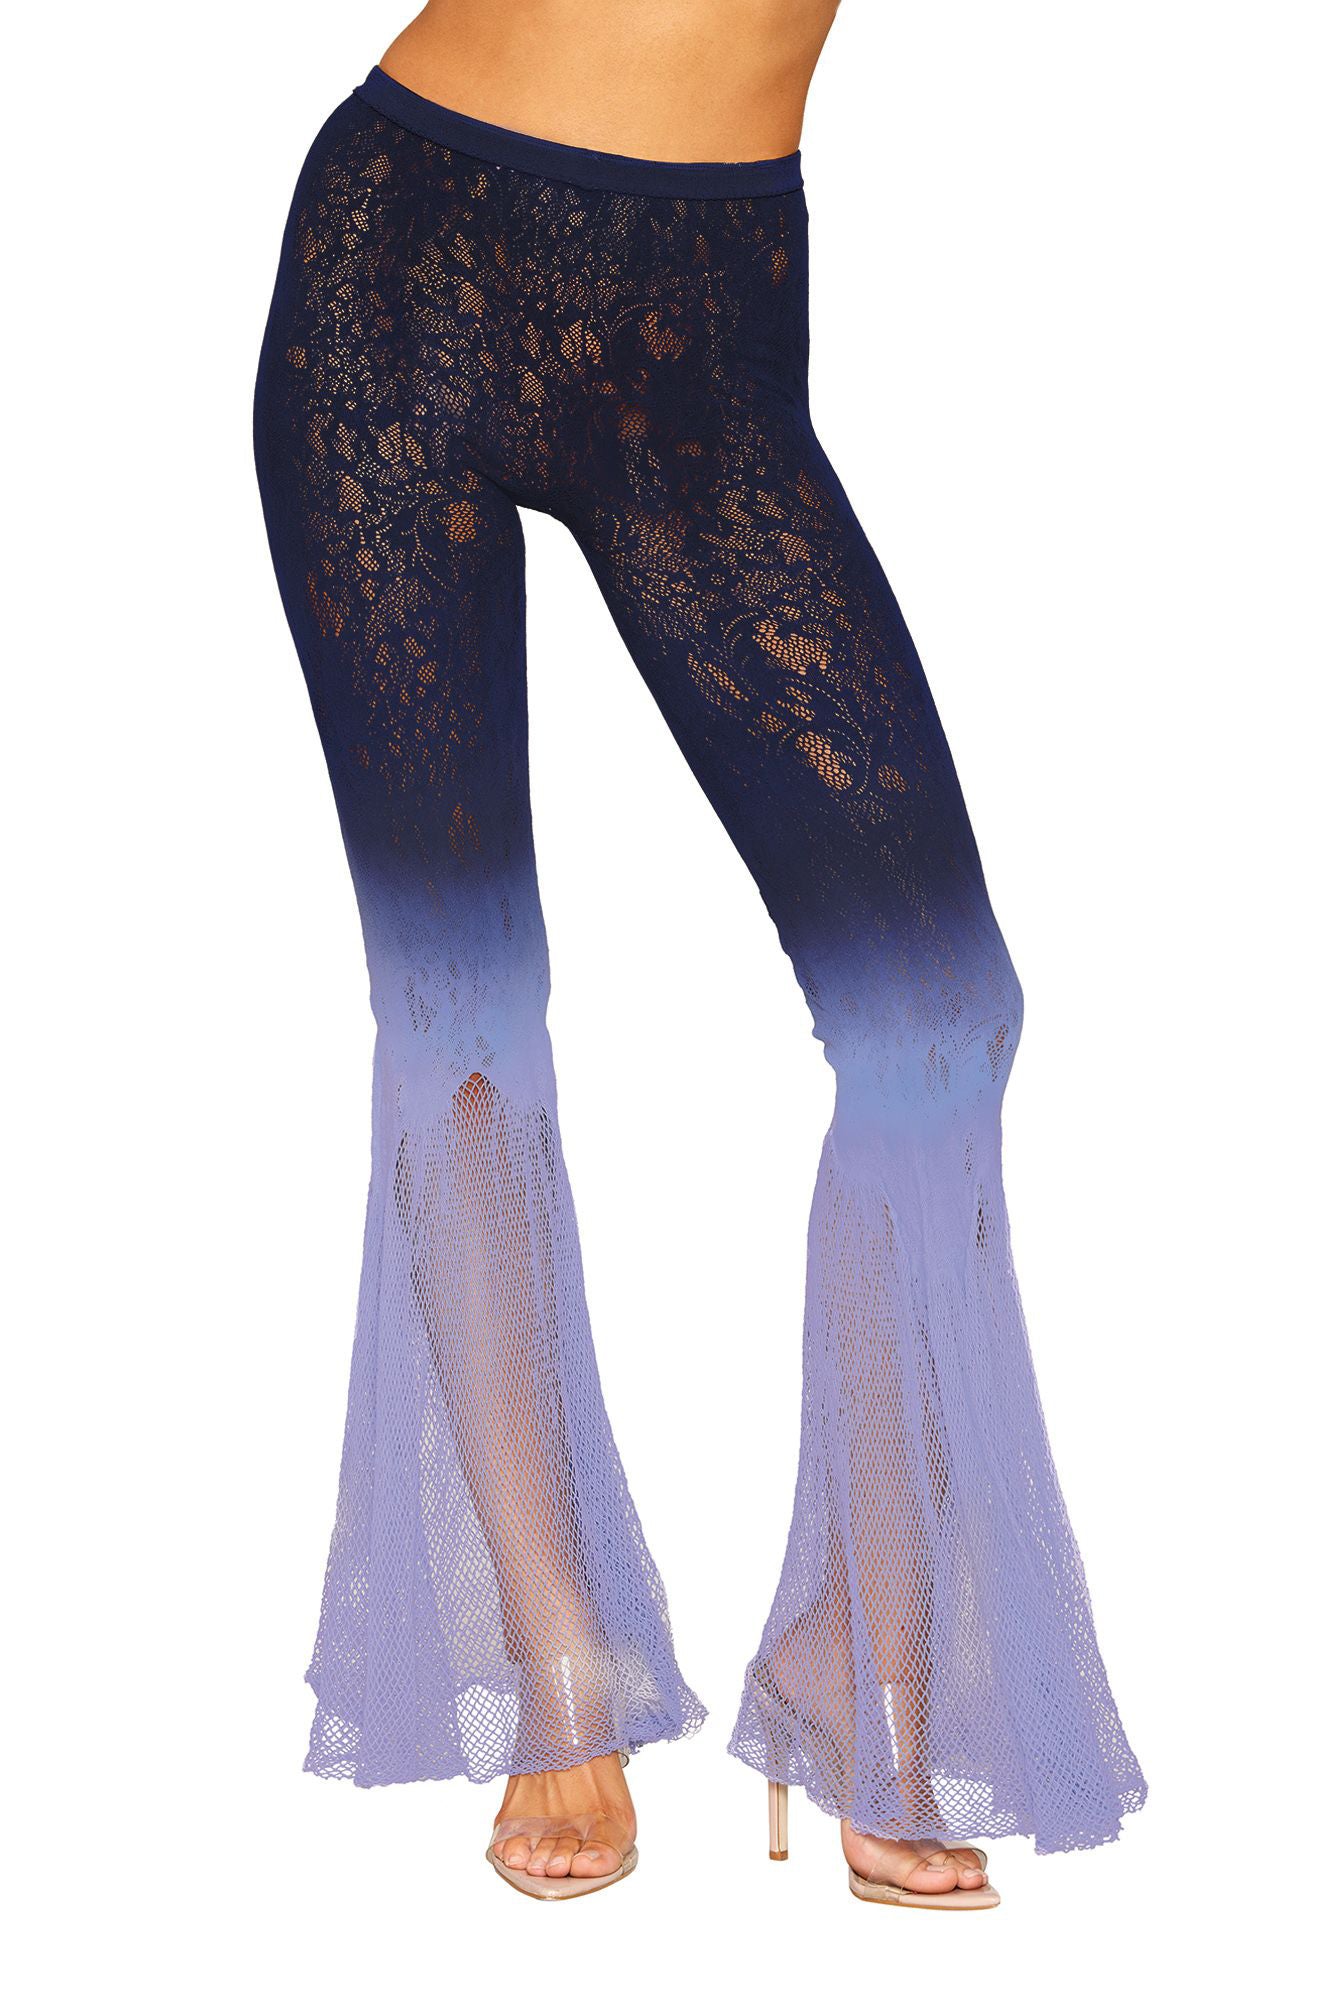 Flair Leg Pantyhose - One Size - Denim/hydrangea-1